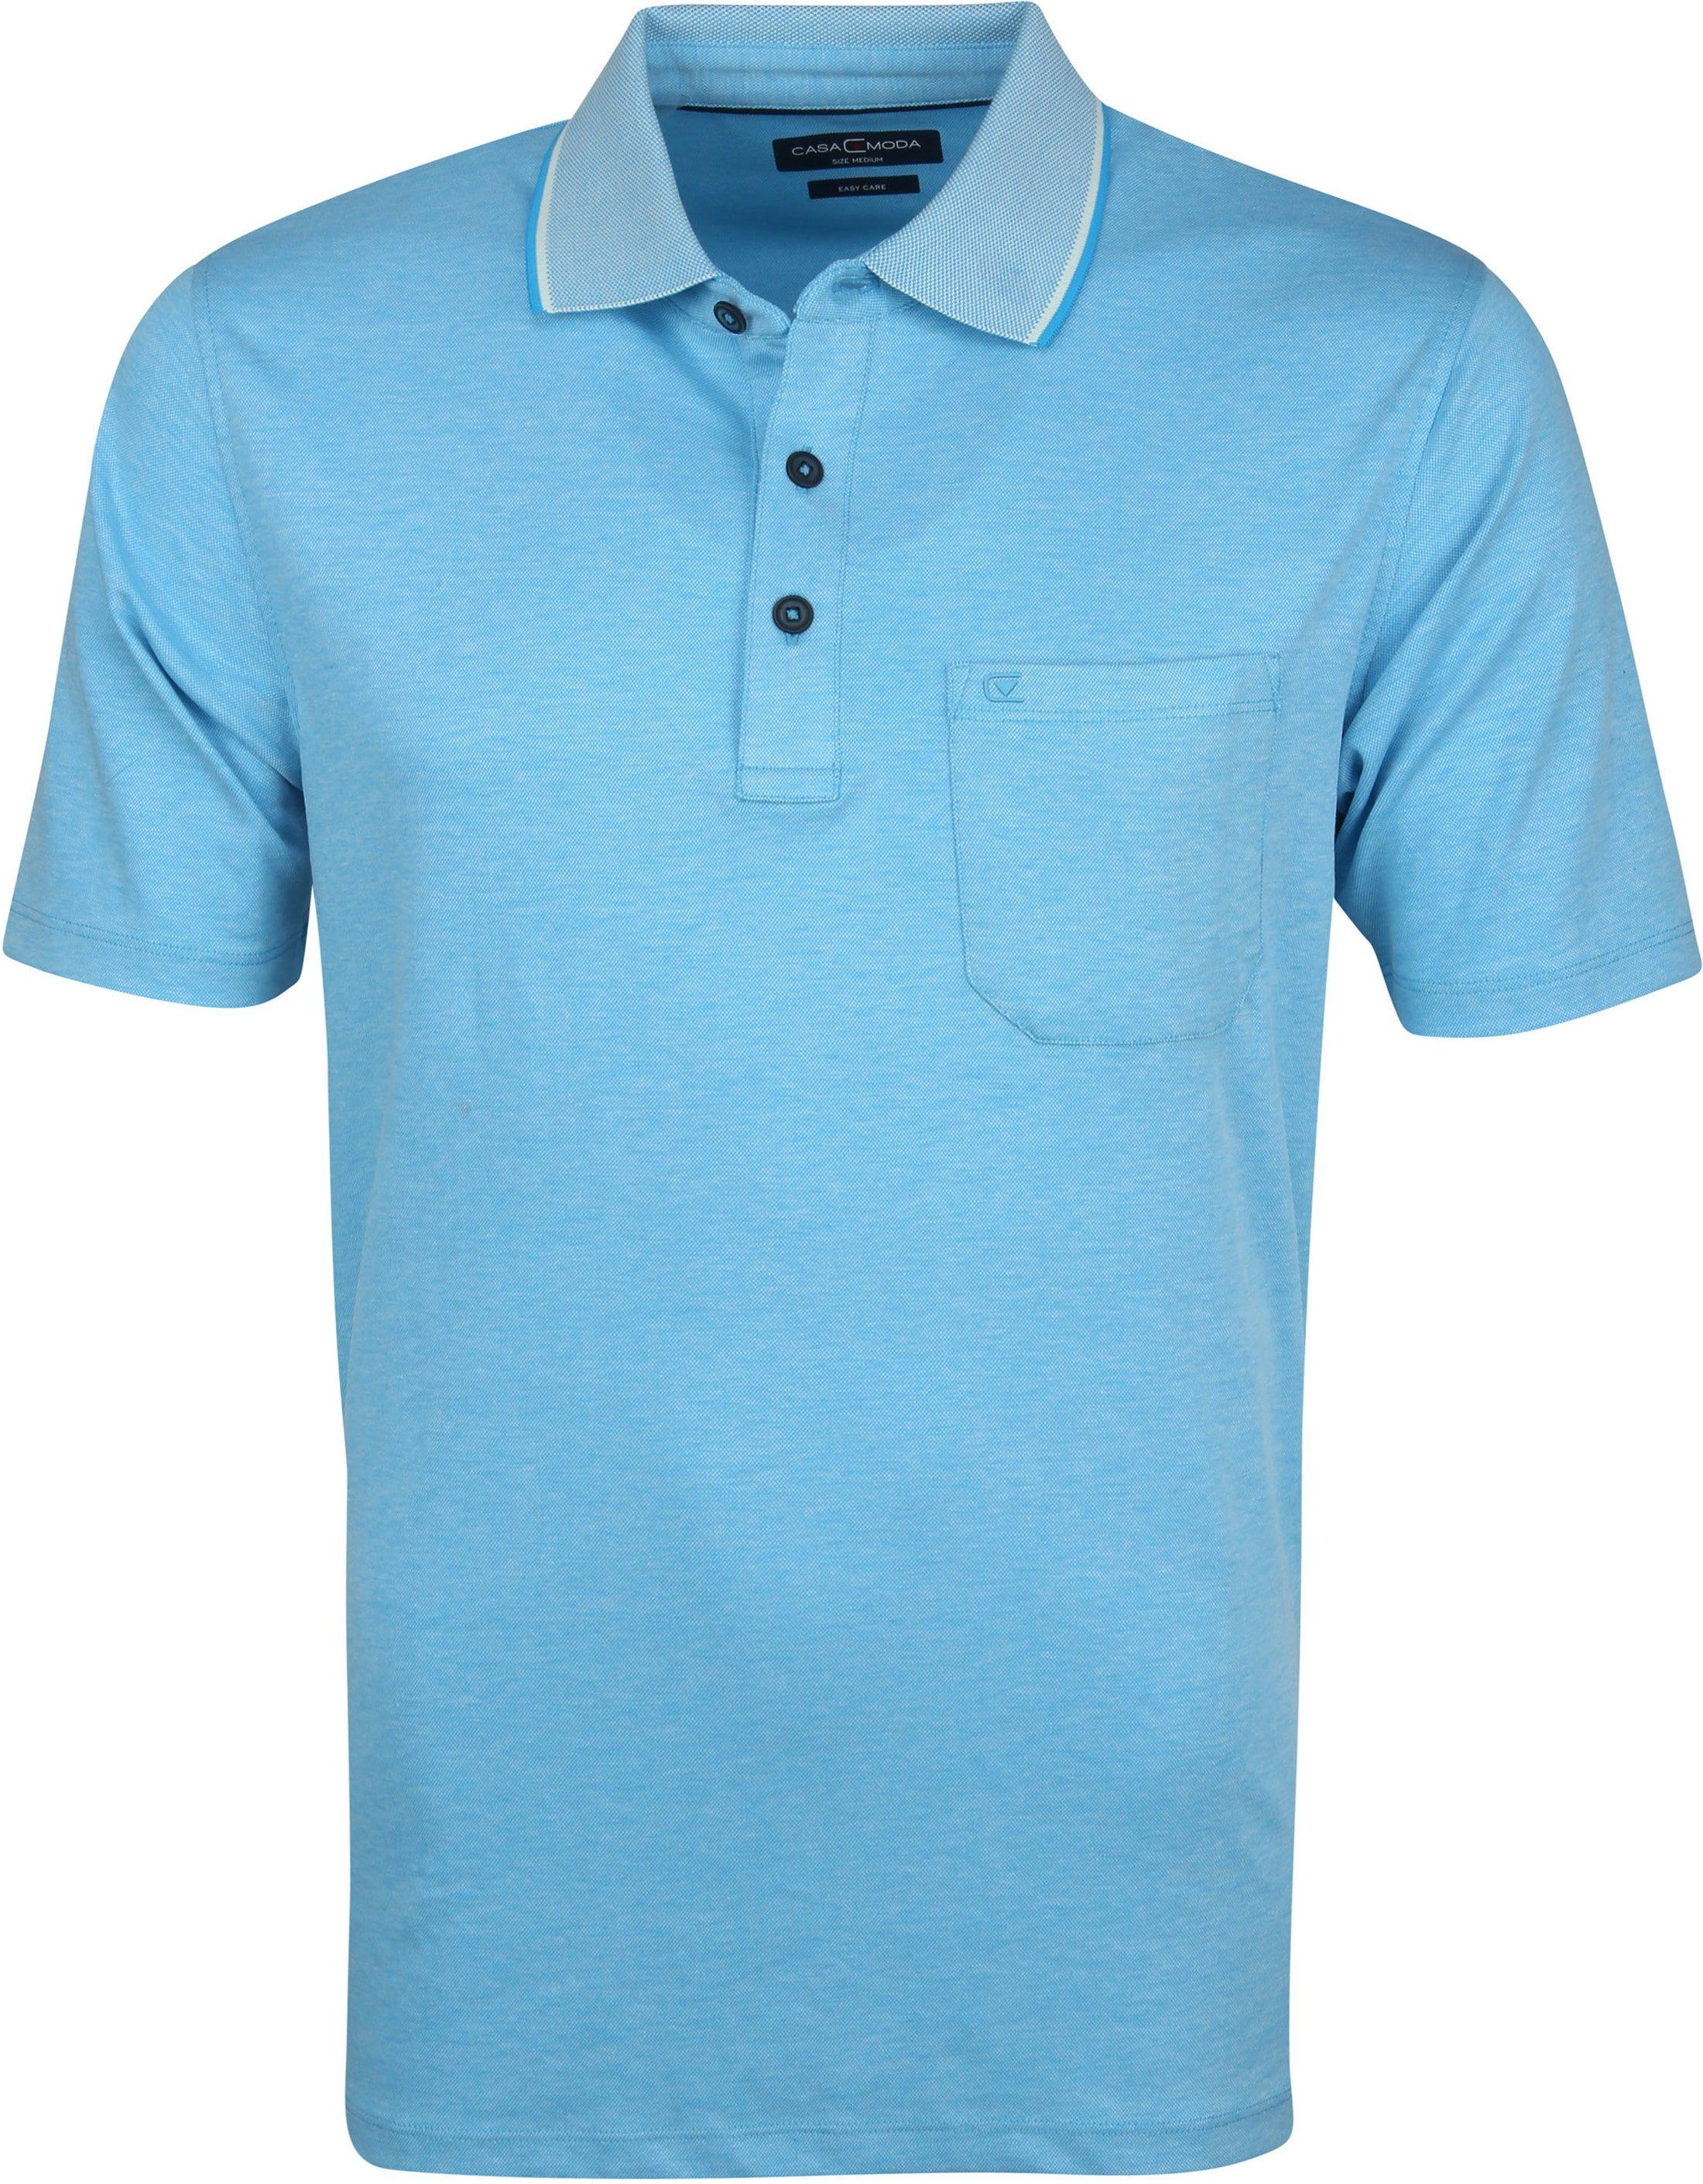 Casa Moda Polo Shirt Aqua Blue size L